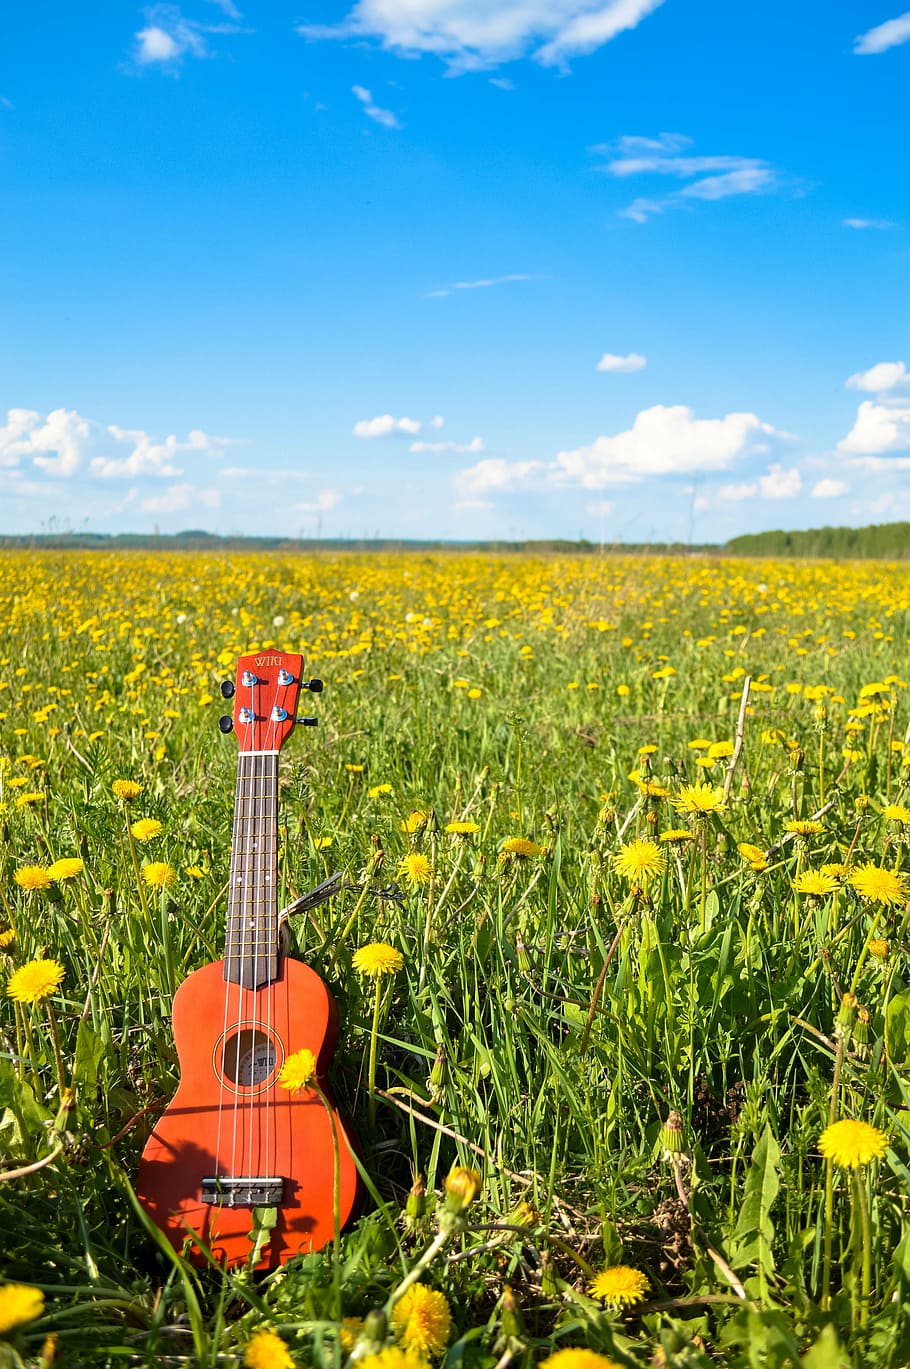 brown, ukulele, yellow, petaled flower field, blue, white, sky, daytime, flower, guitar